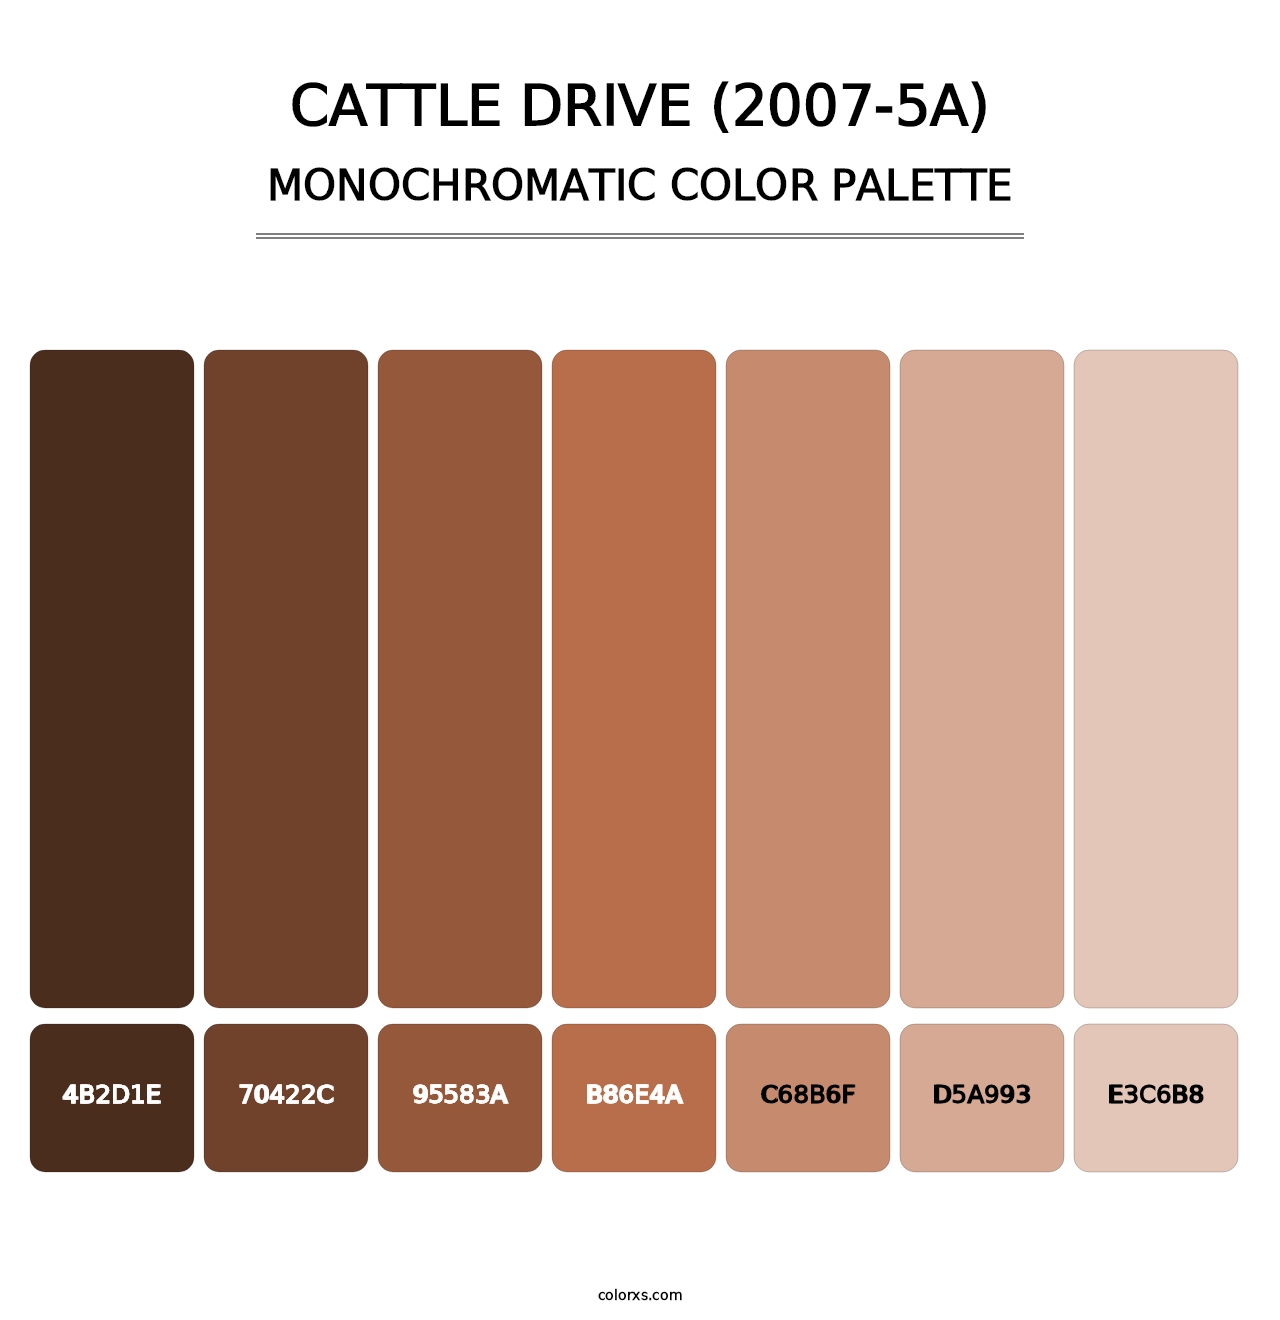 Cattle Drive (2007-5A) - Monochromatic Color Palette